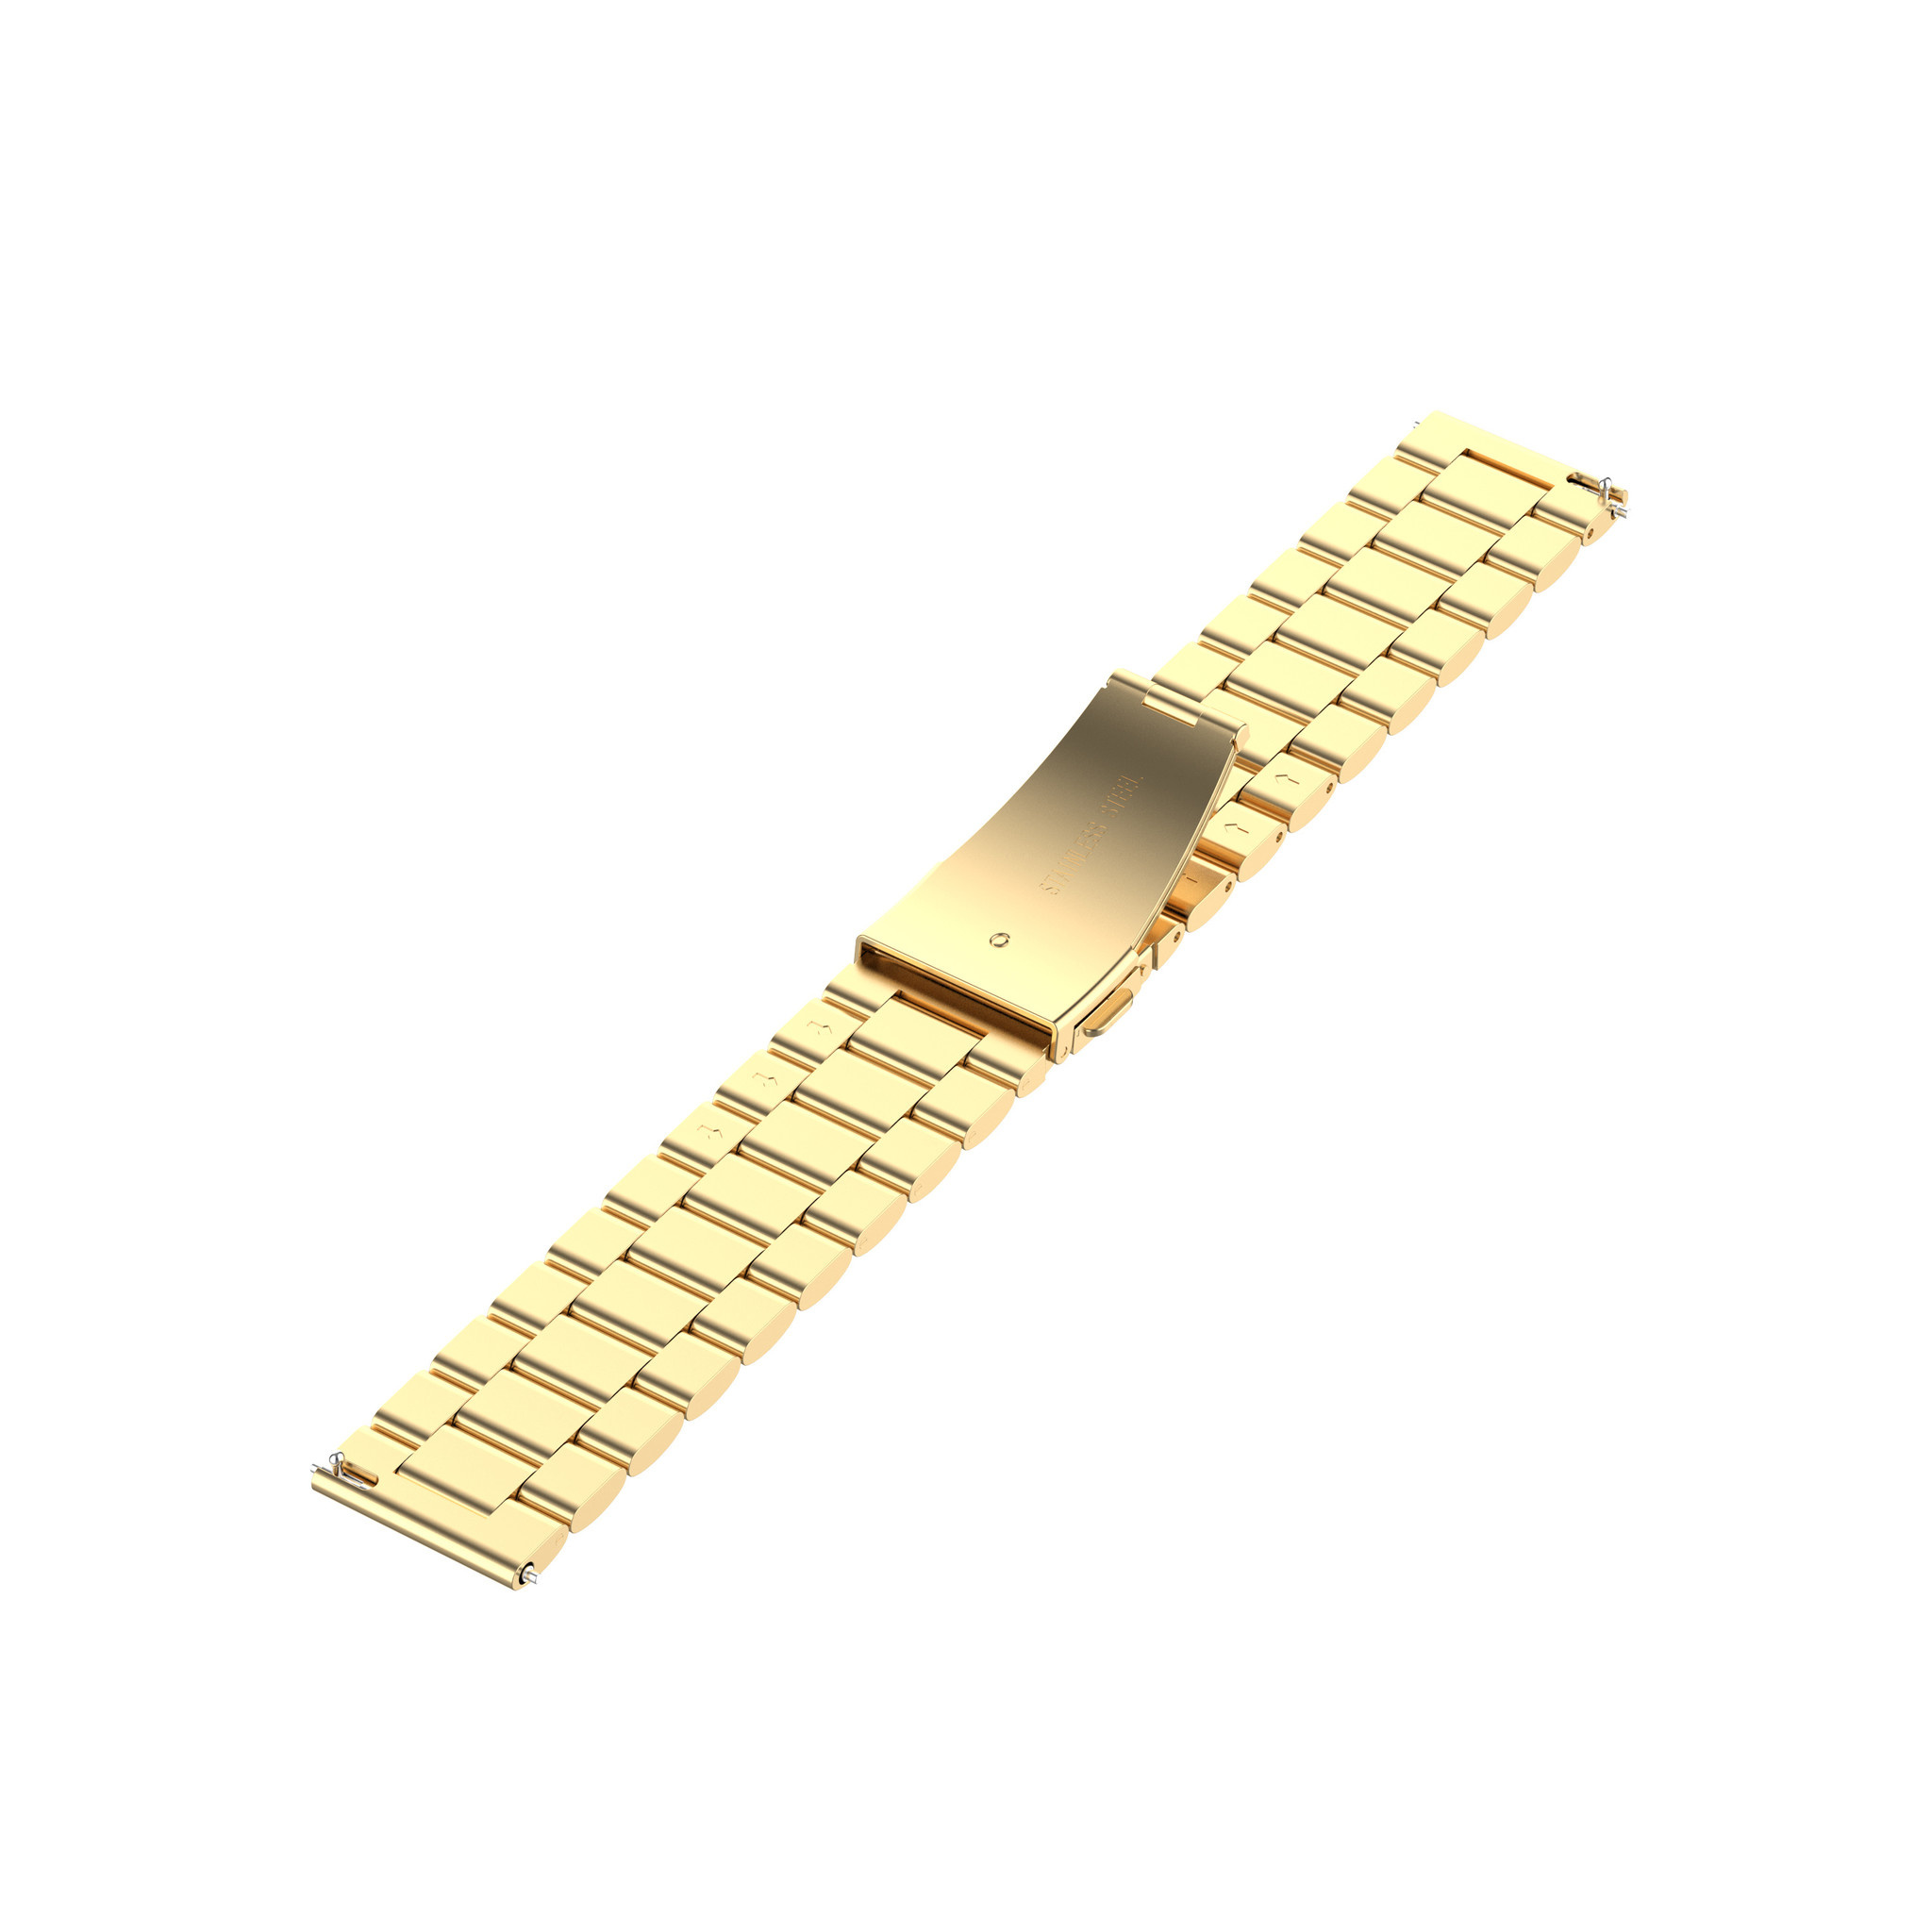 Samsung Galaxy Watch Beads Steel Link Strap - Gold